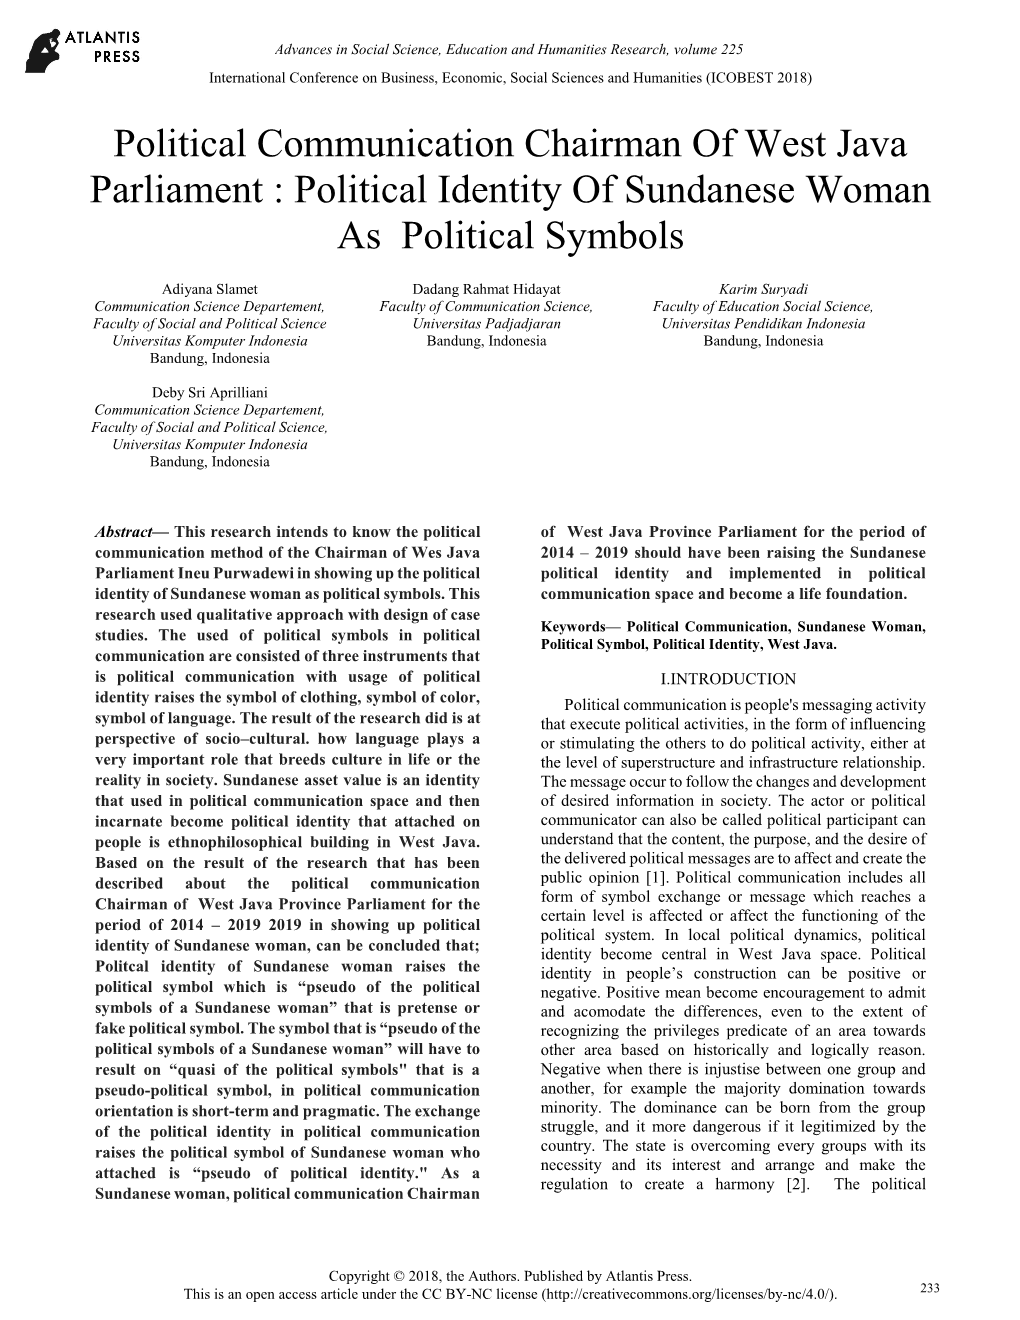 Political Communication Chairman of West Java Parliament : Political Identity of Sundanese Woman As Political Symbols